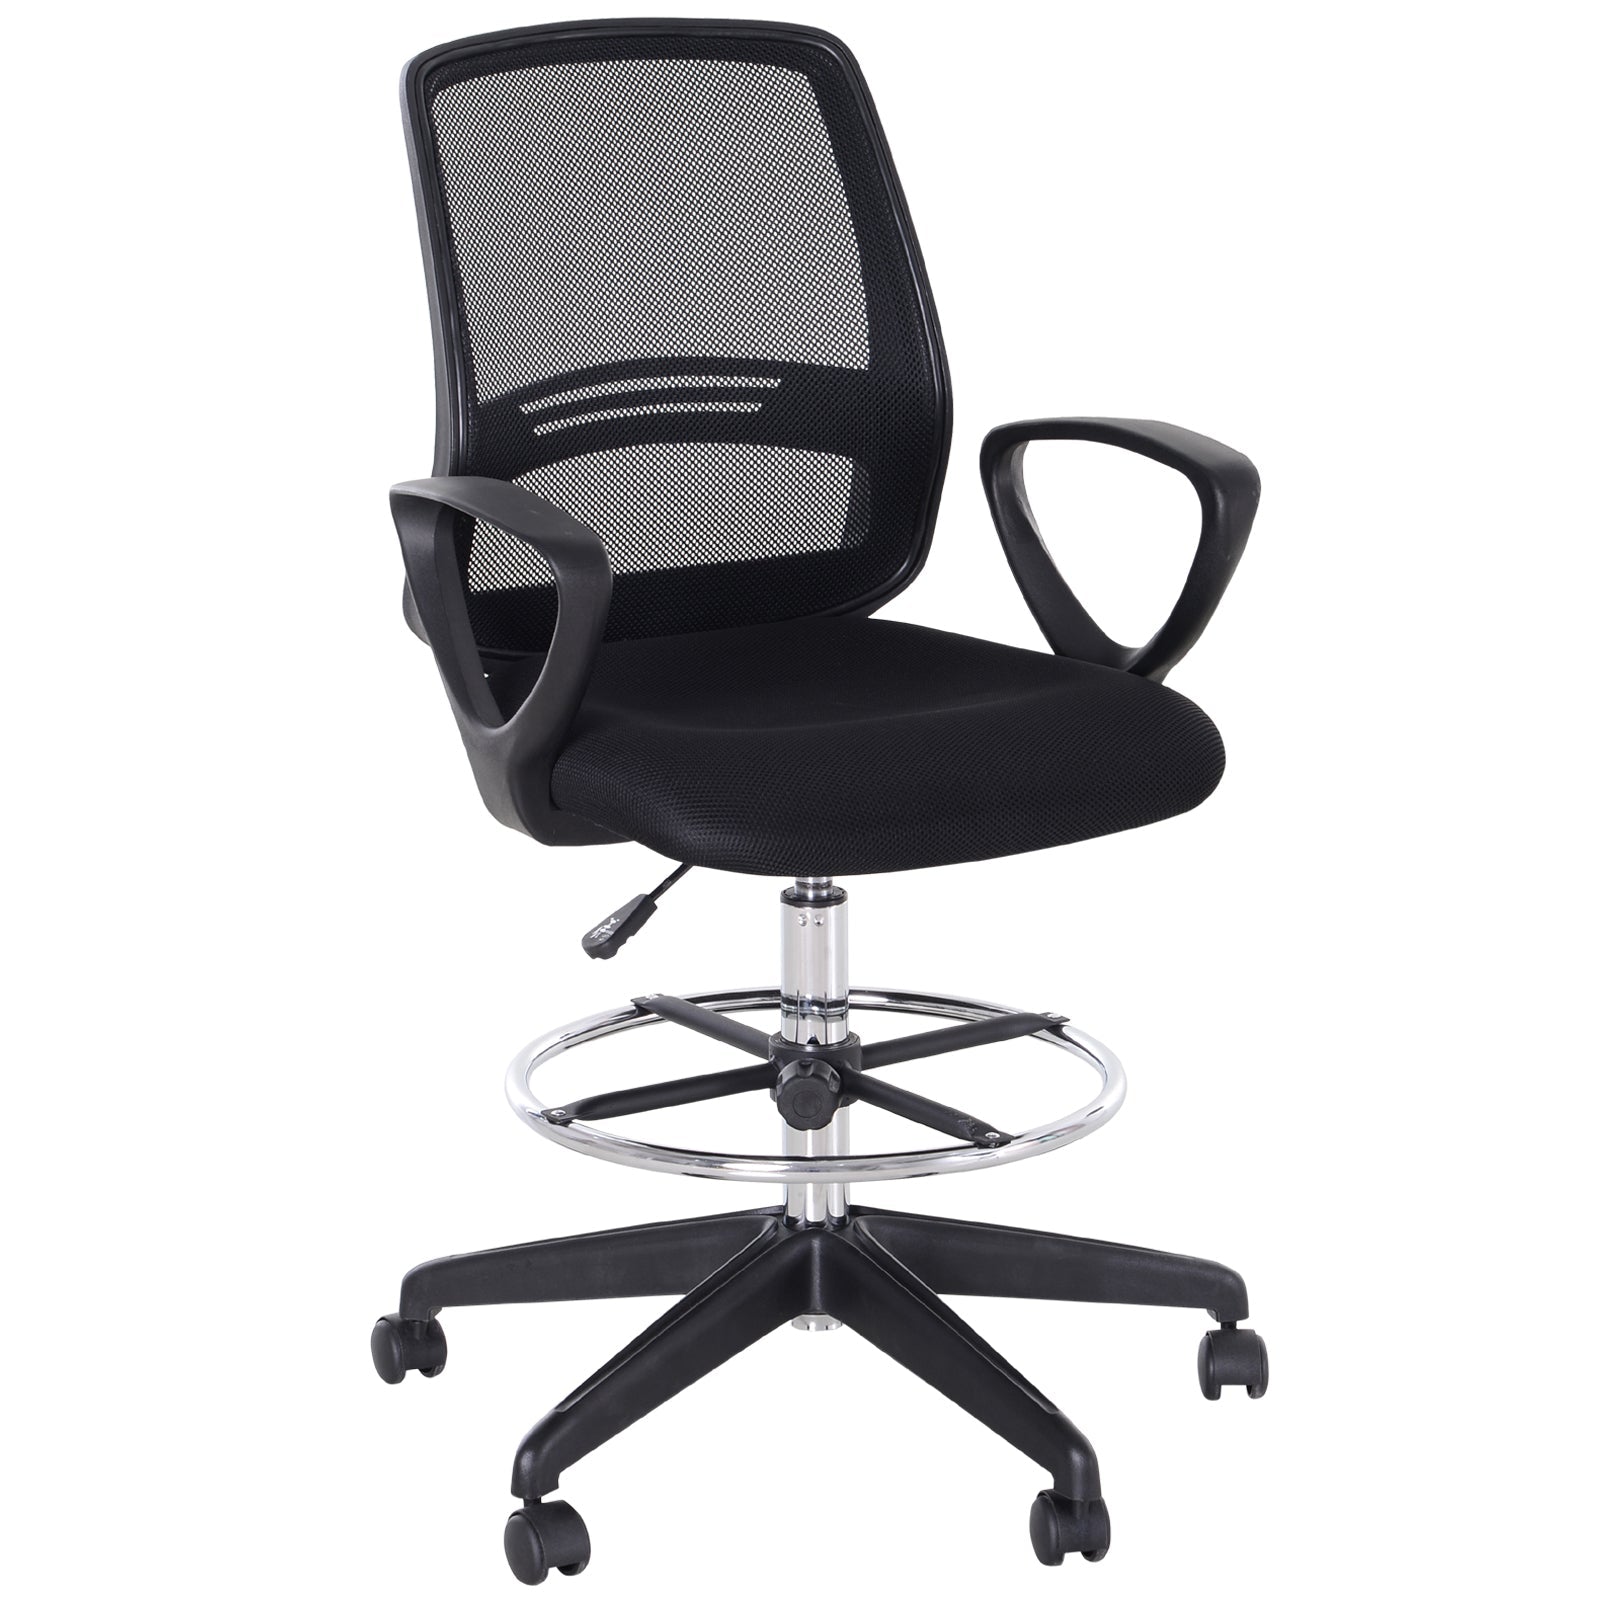 ProperAV Tall Ergonomic Back Office Chair with Adjustable Height Footrest and 360deg Swivel - Black